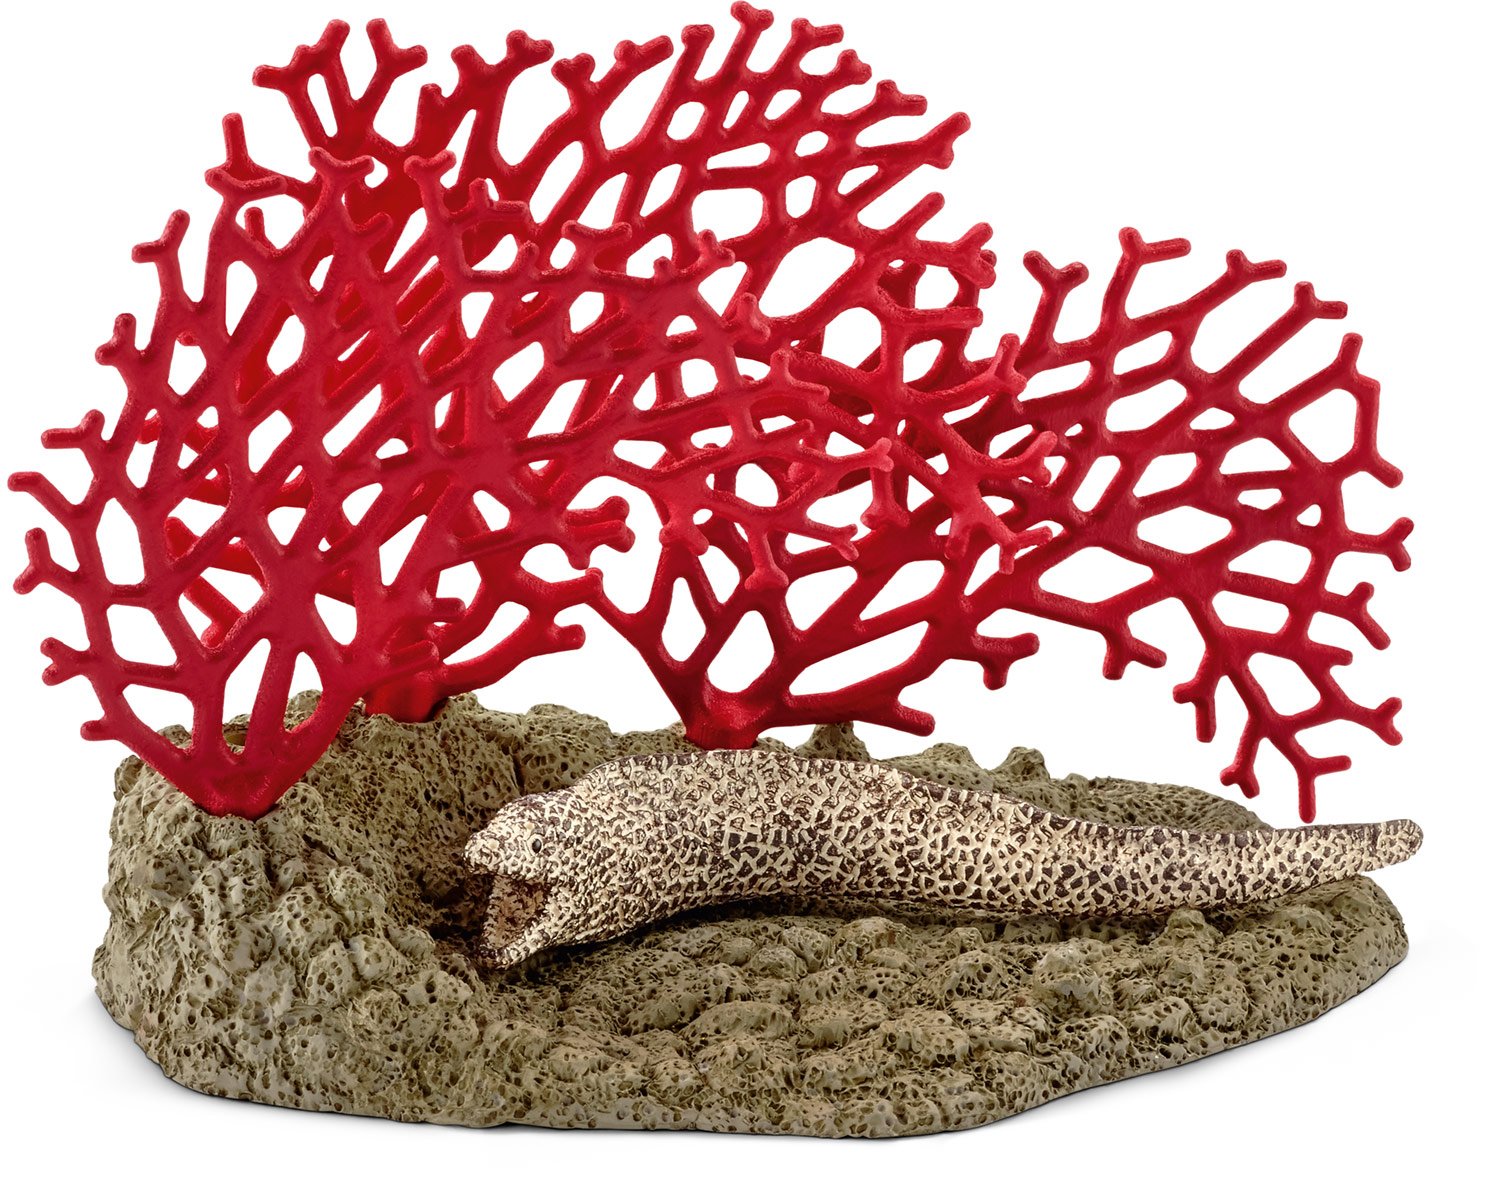 Wild Life Schleich Moray Eel Toy